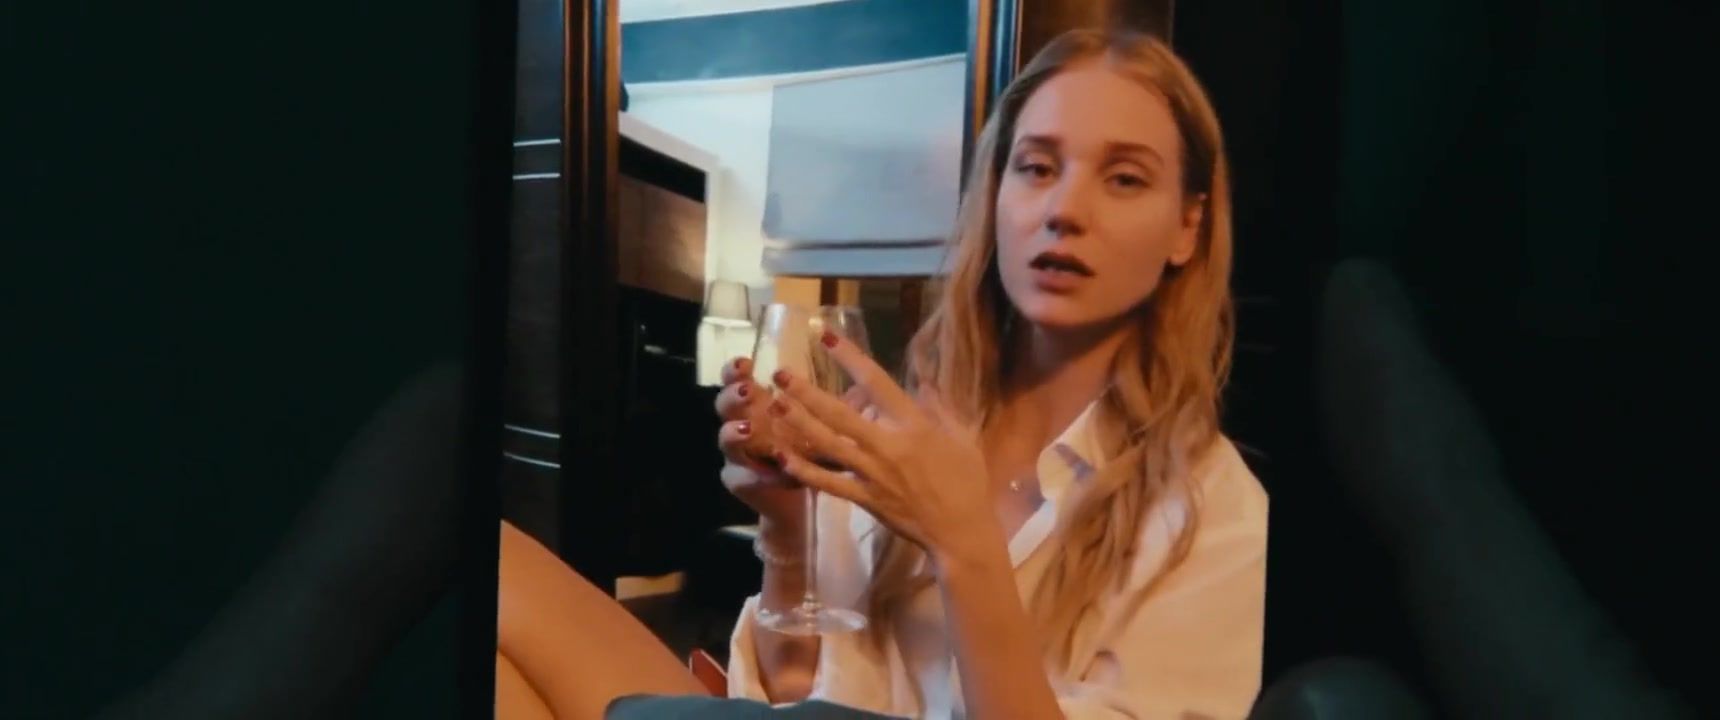 Free Rough Sex Sex video Russian Theater Actress Cristina Asmus in Erotic & Porn Scene, Film "text" Internal - 2